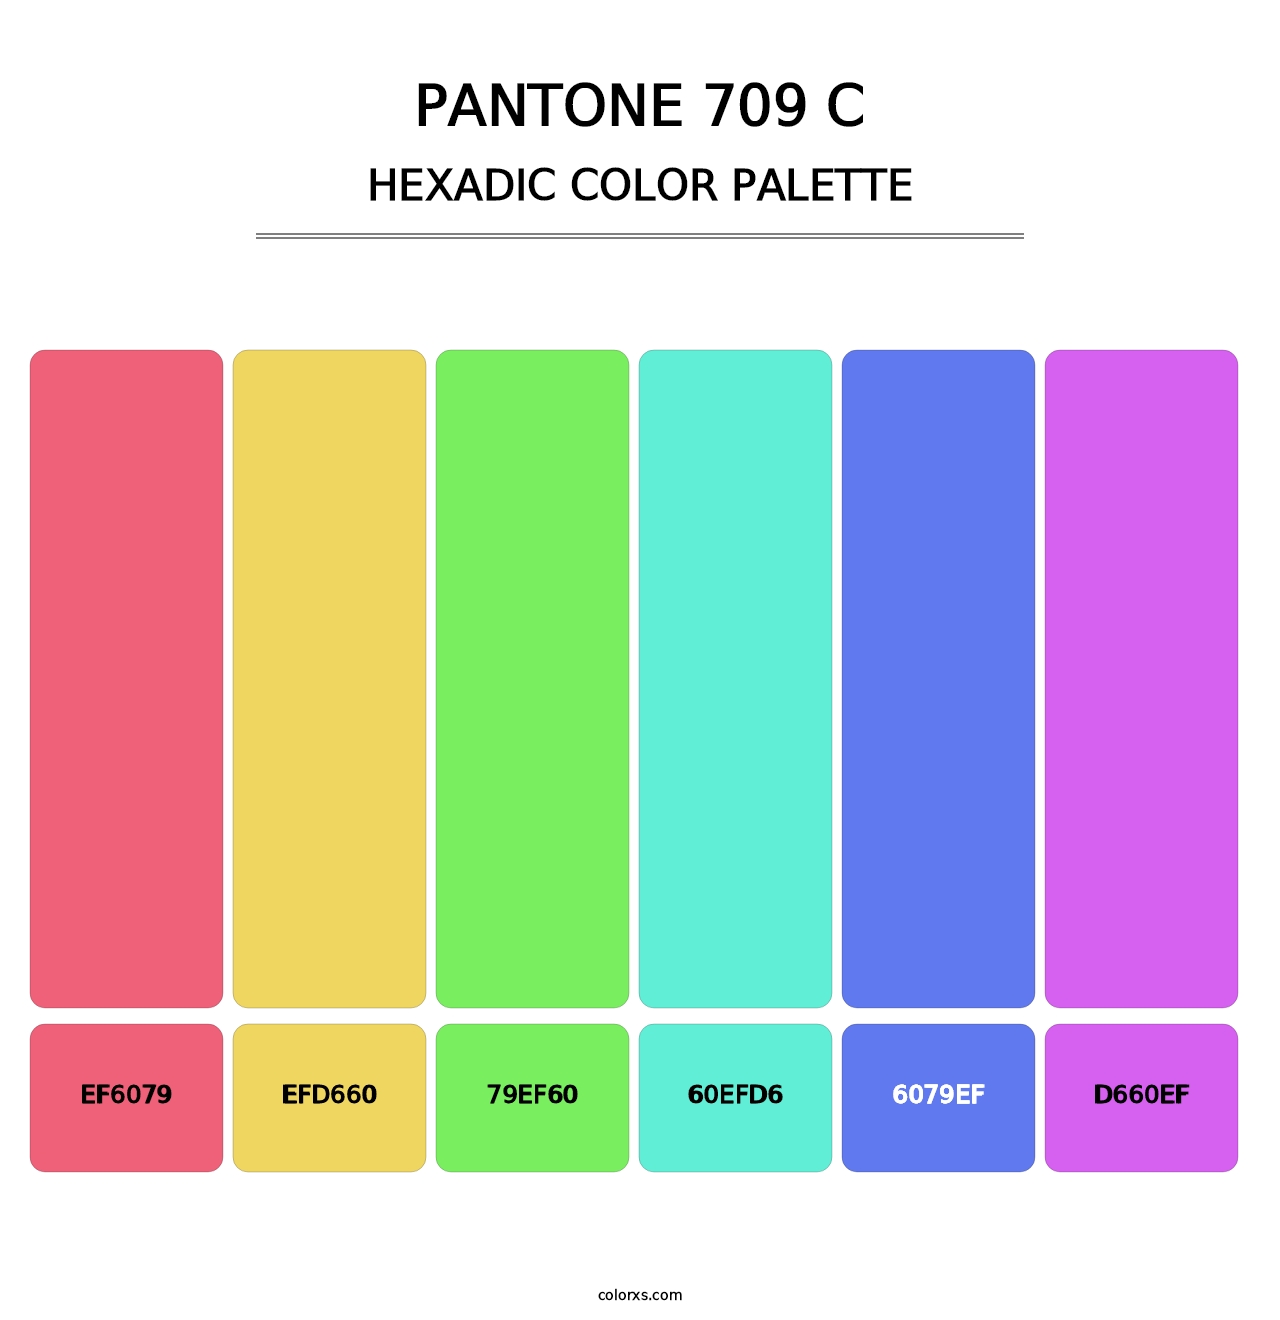 PANTONE 709 C - Hexadic Color Palette